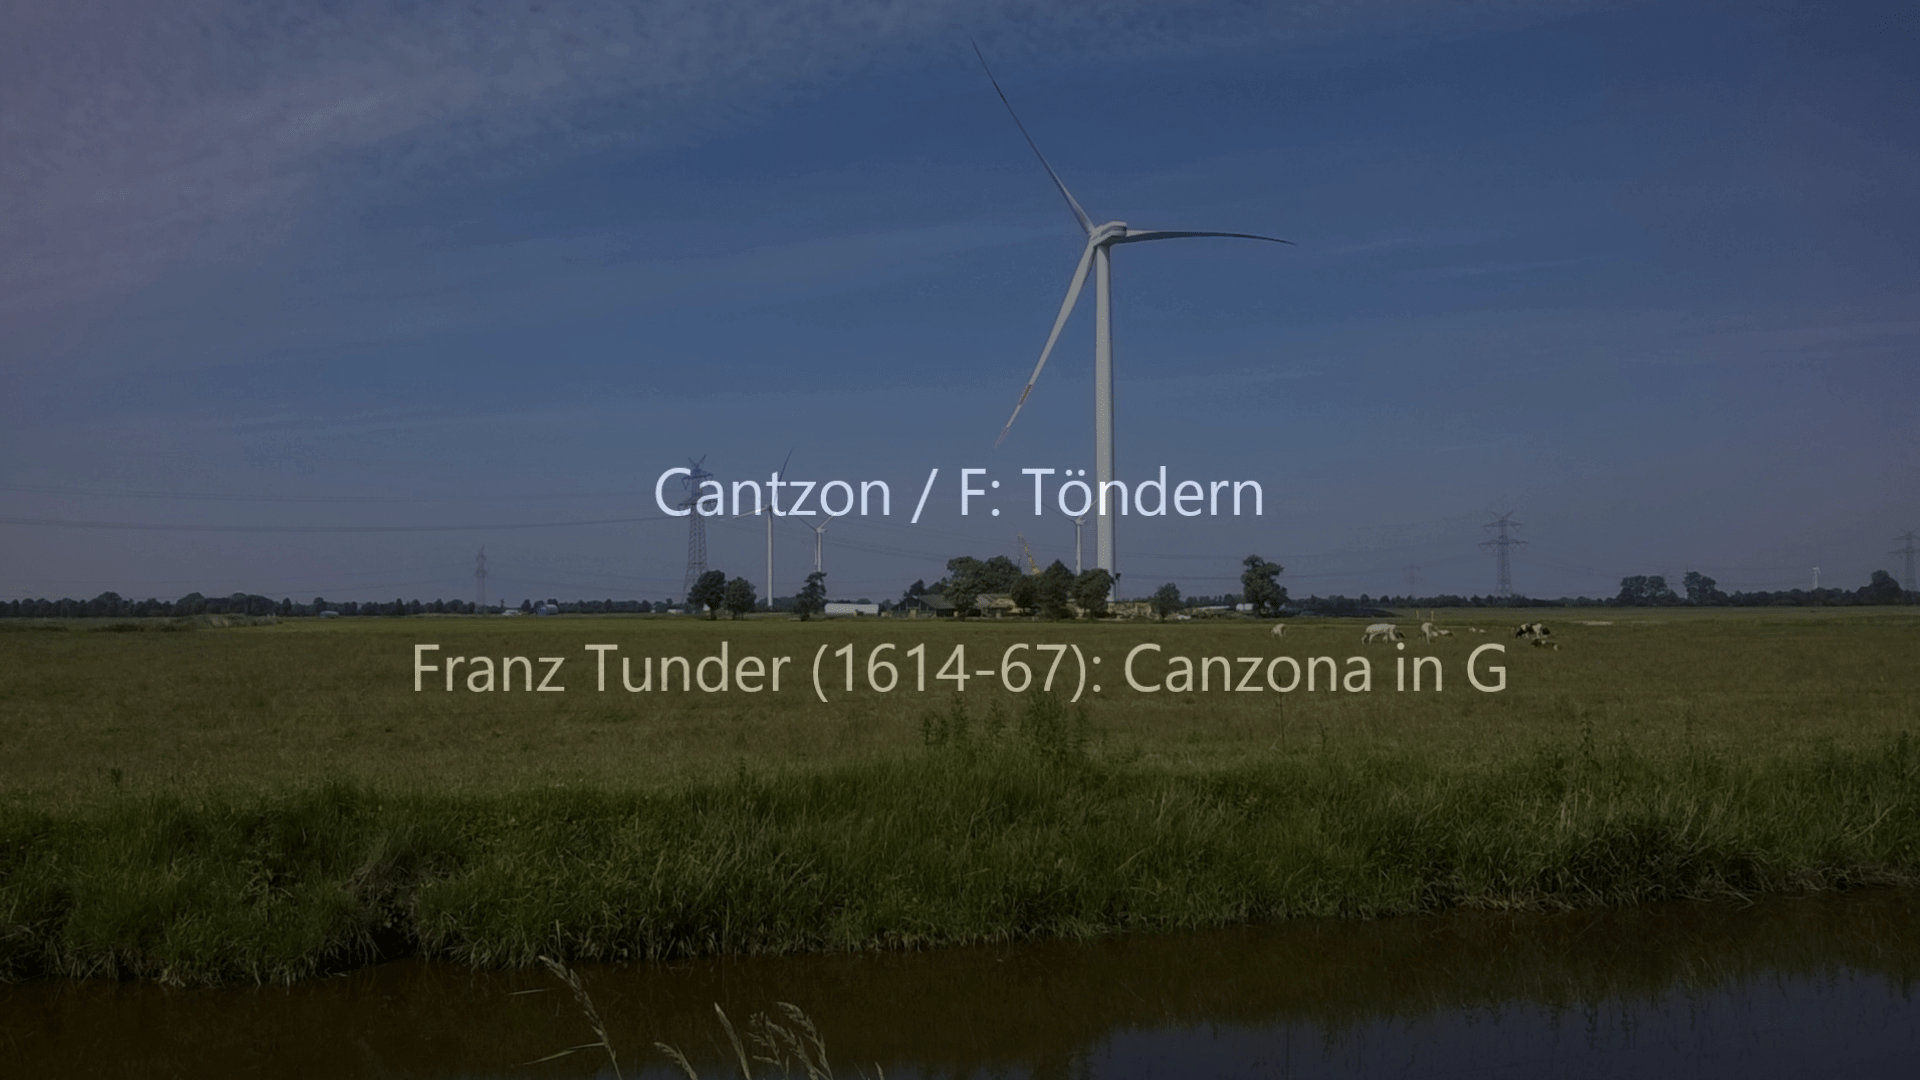 Cantzon / F: Töndern